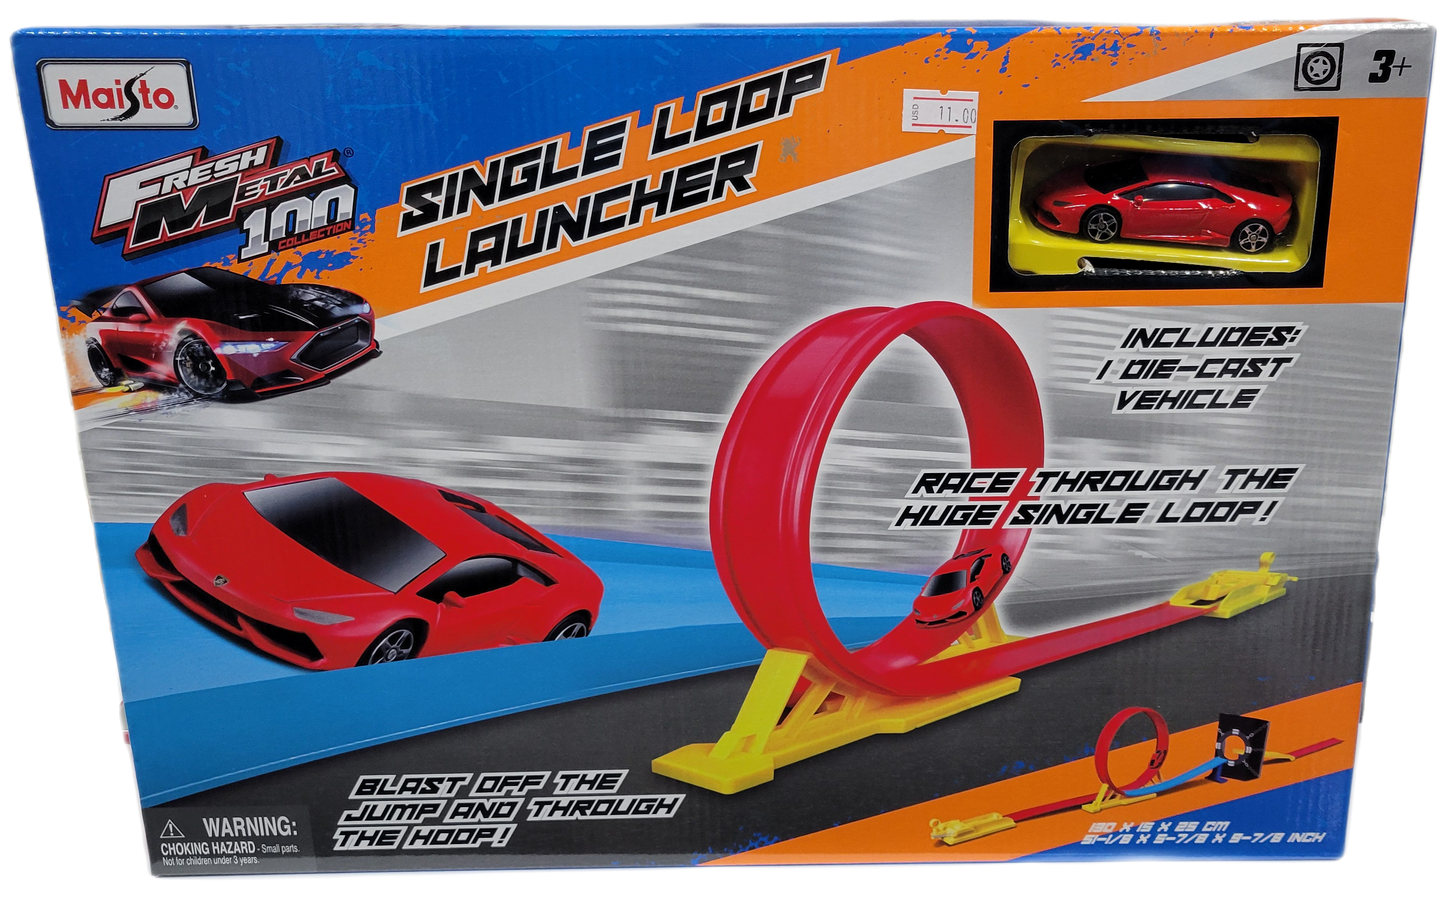 Car Loop Launcher